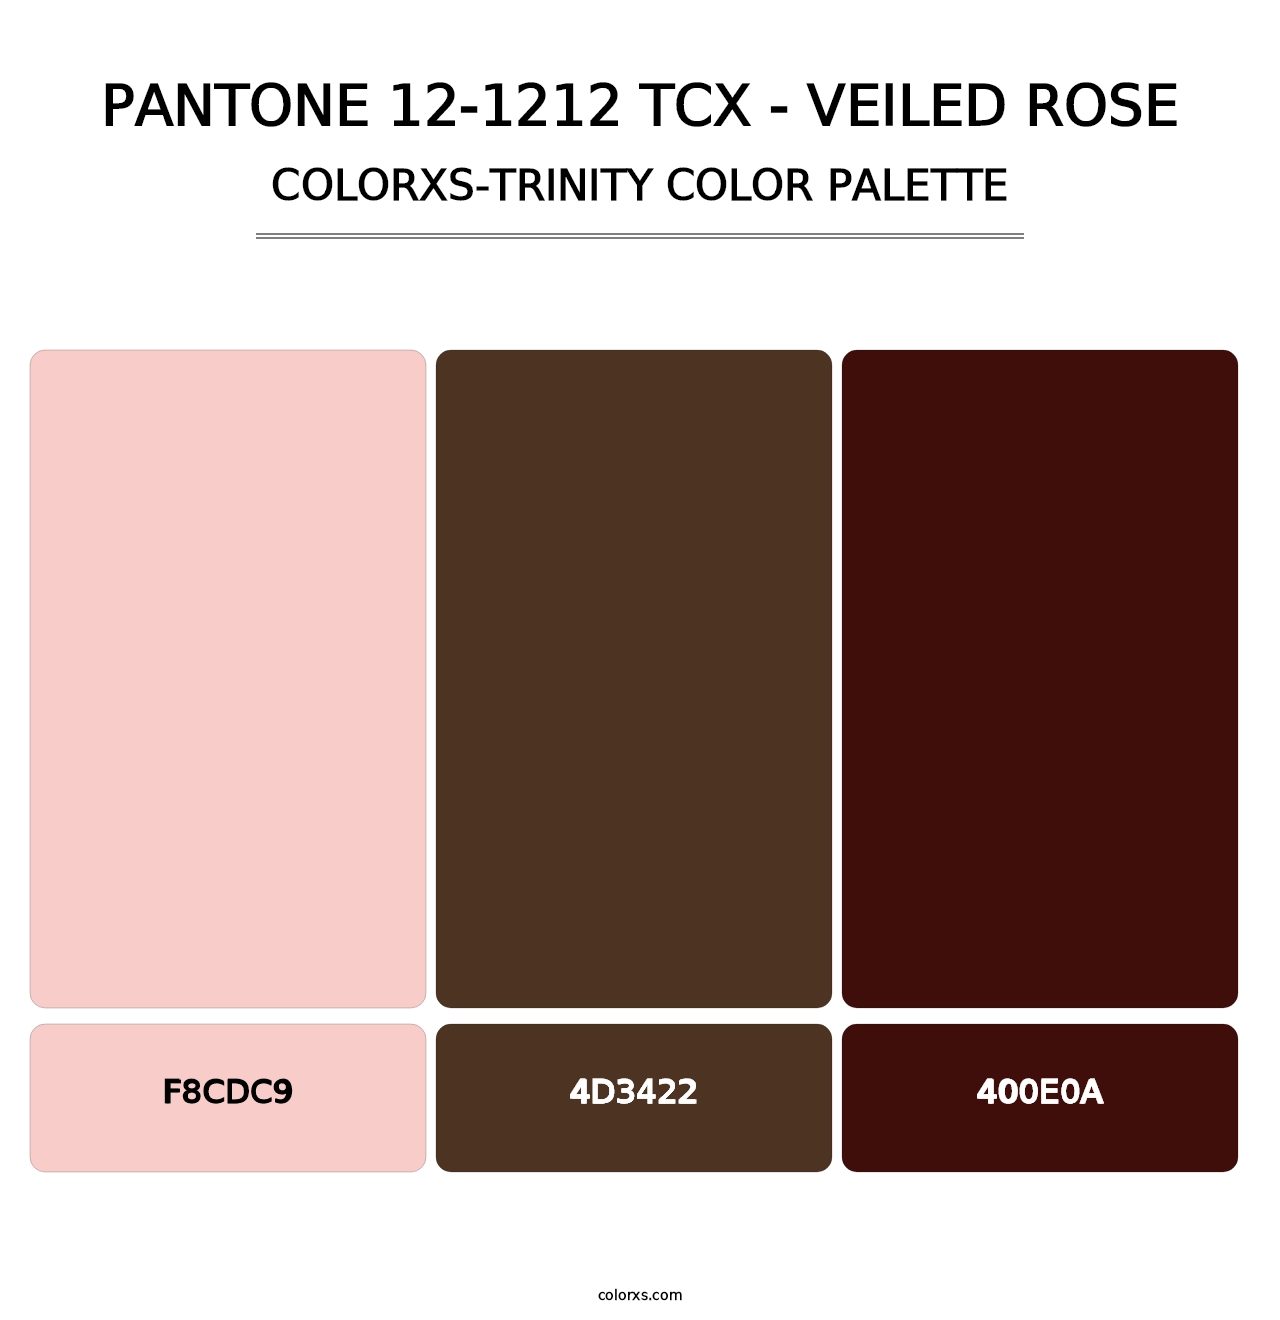 PANTONE 12-1212 TCX - Veiled Rose - Colorxs Trinity Palette